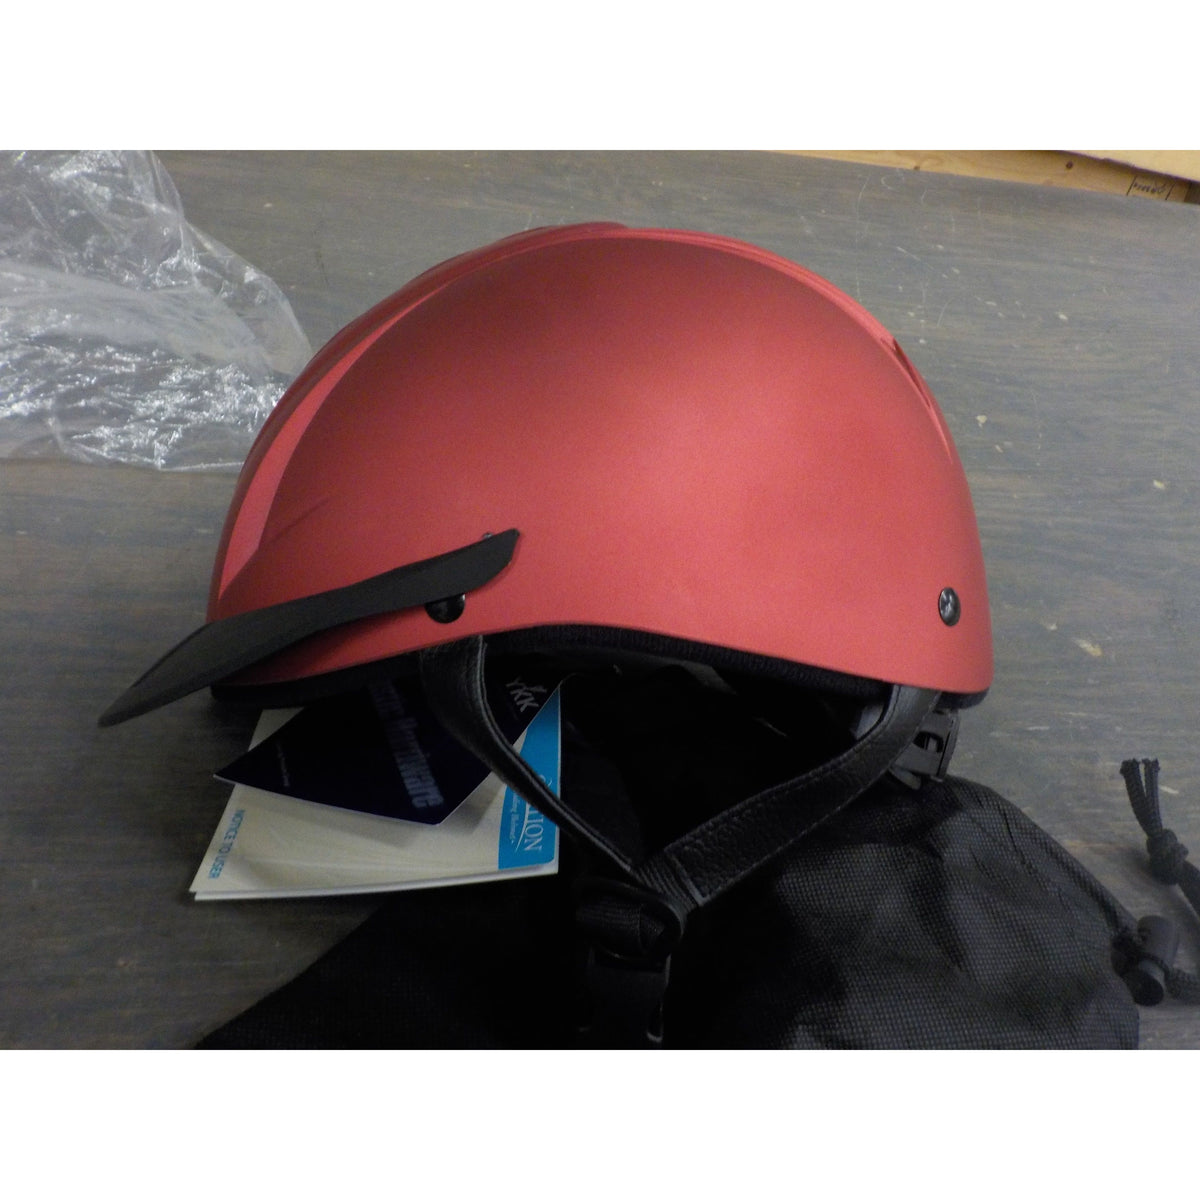 Ovation Metallic Schooler Helmet - Red - X-Small/Small - Used - Acceptable